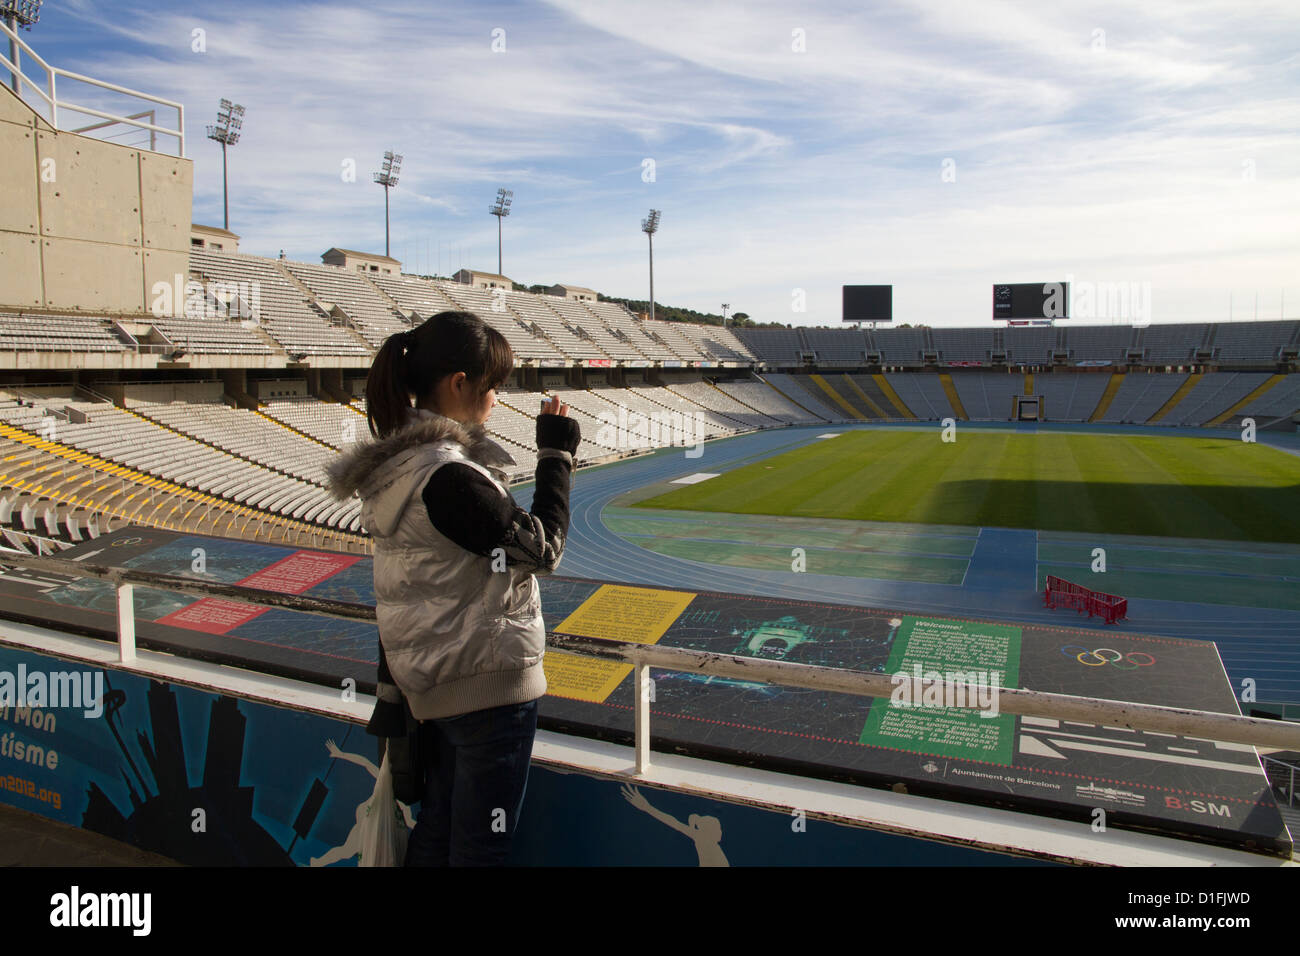 Barcelona Catalonia Spain. Tourist woman shotting photos at Olympic stadium Stock Photo